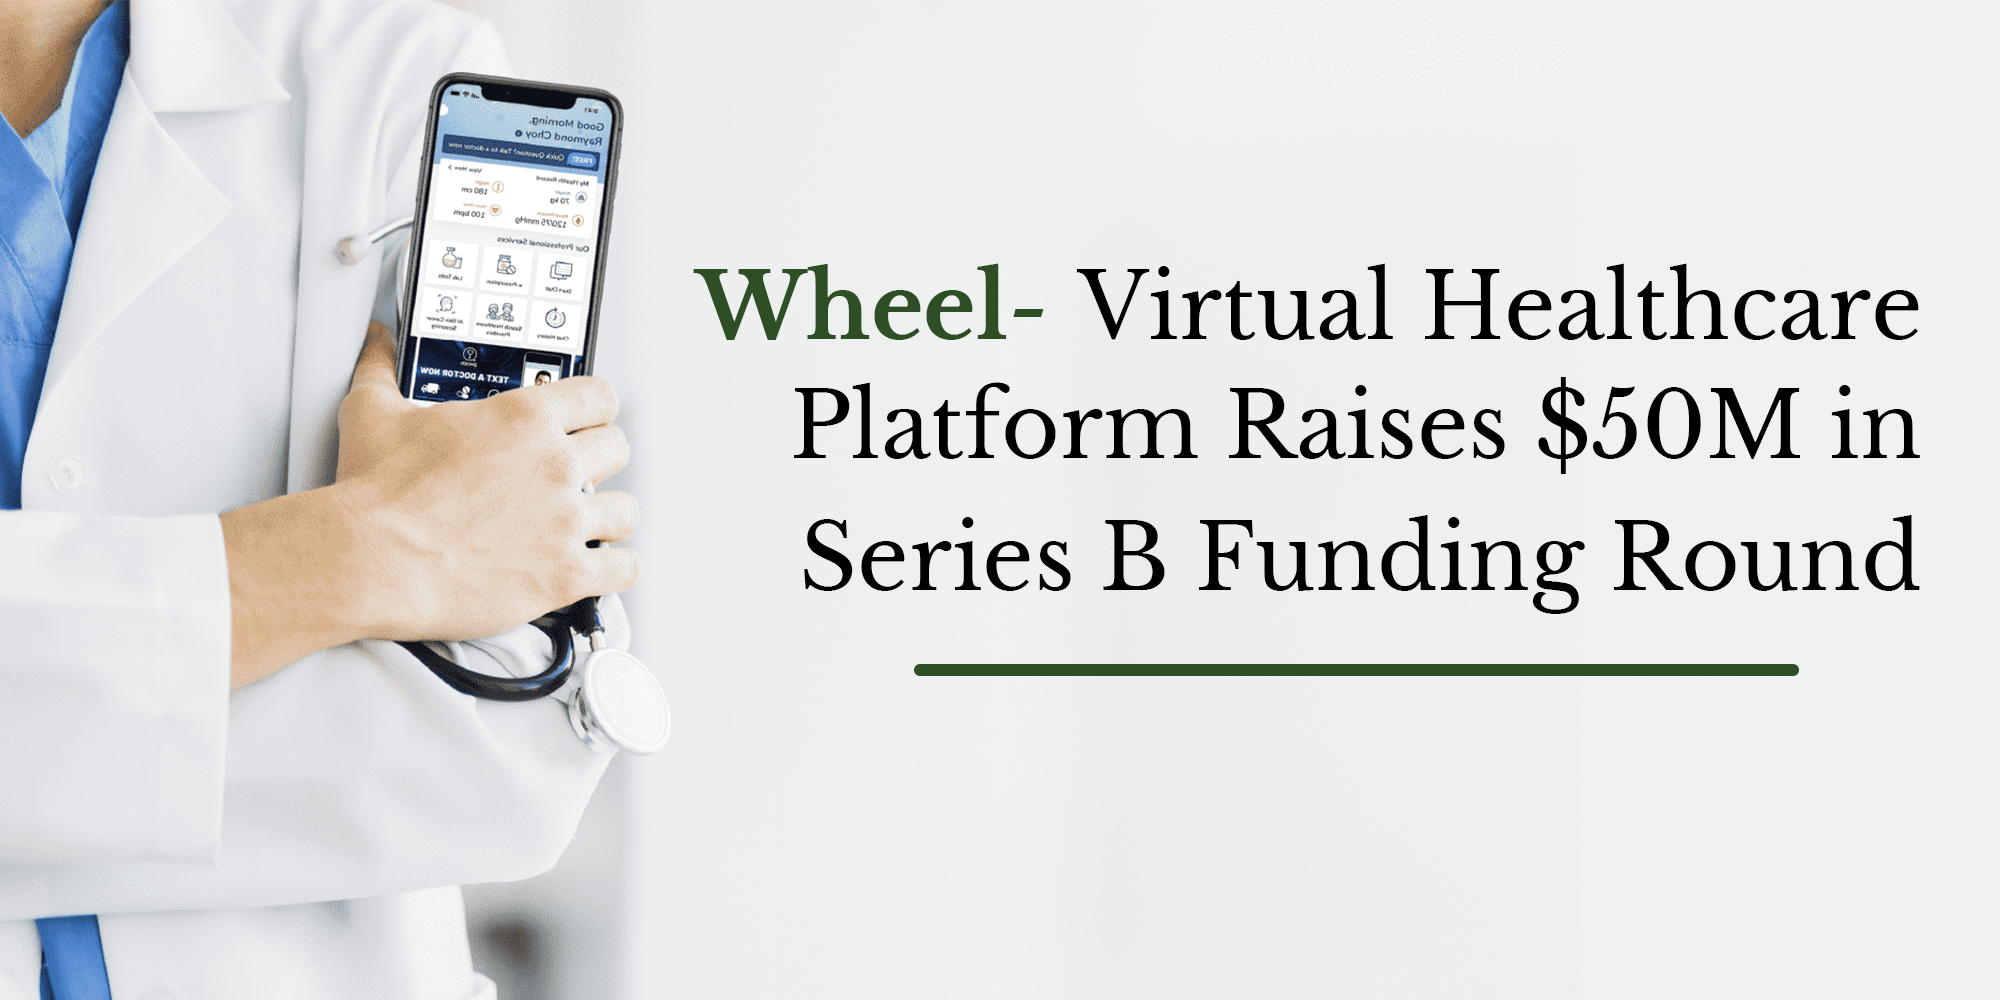 Wheel- Virtual Healthcare Platform Raises $50M In Series B Funding Round